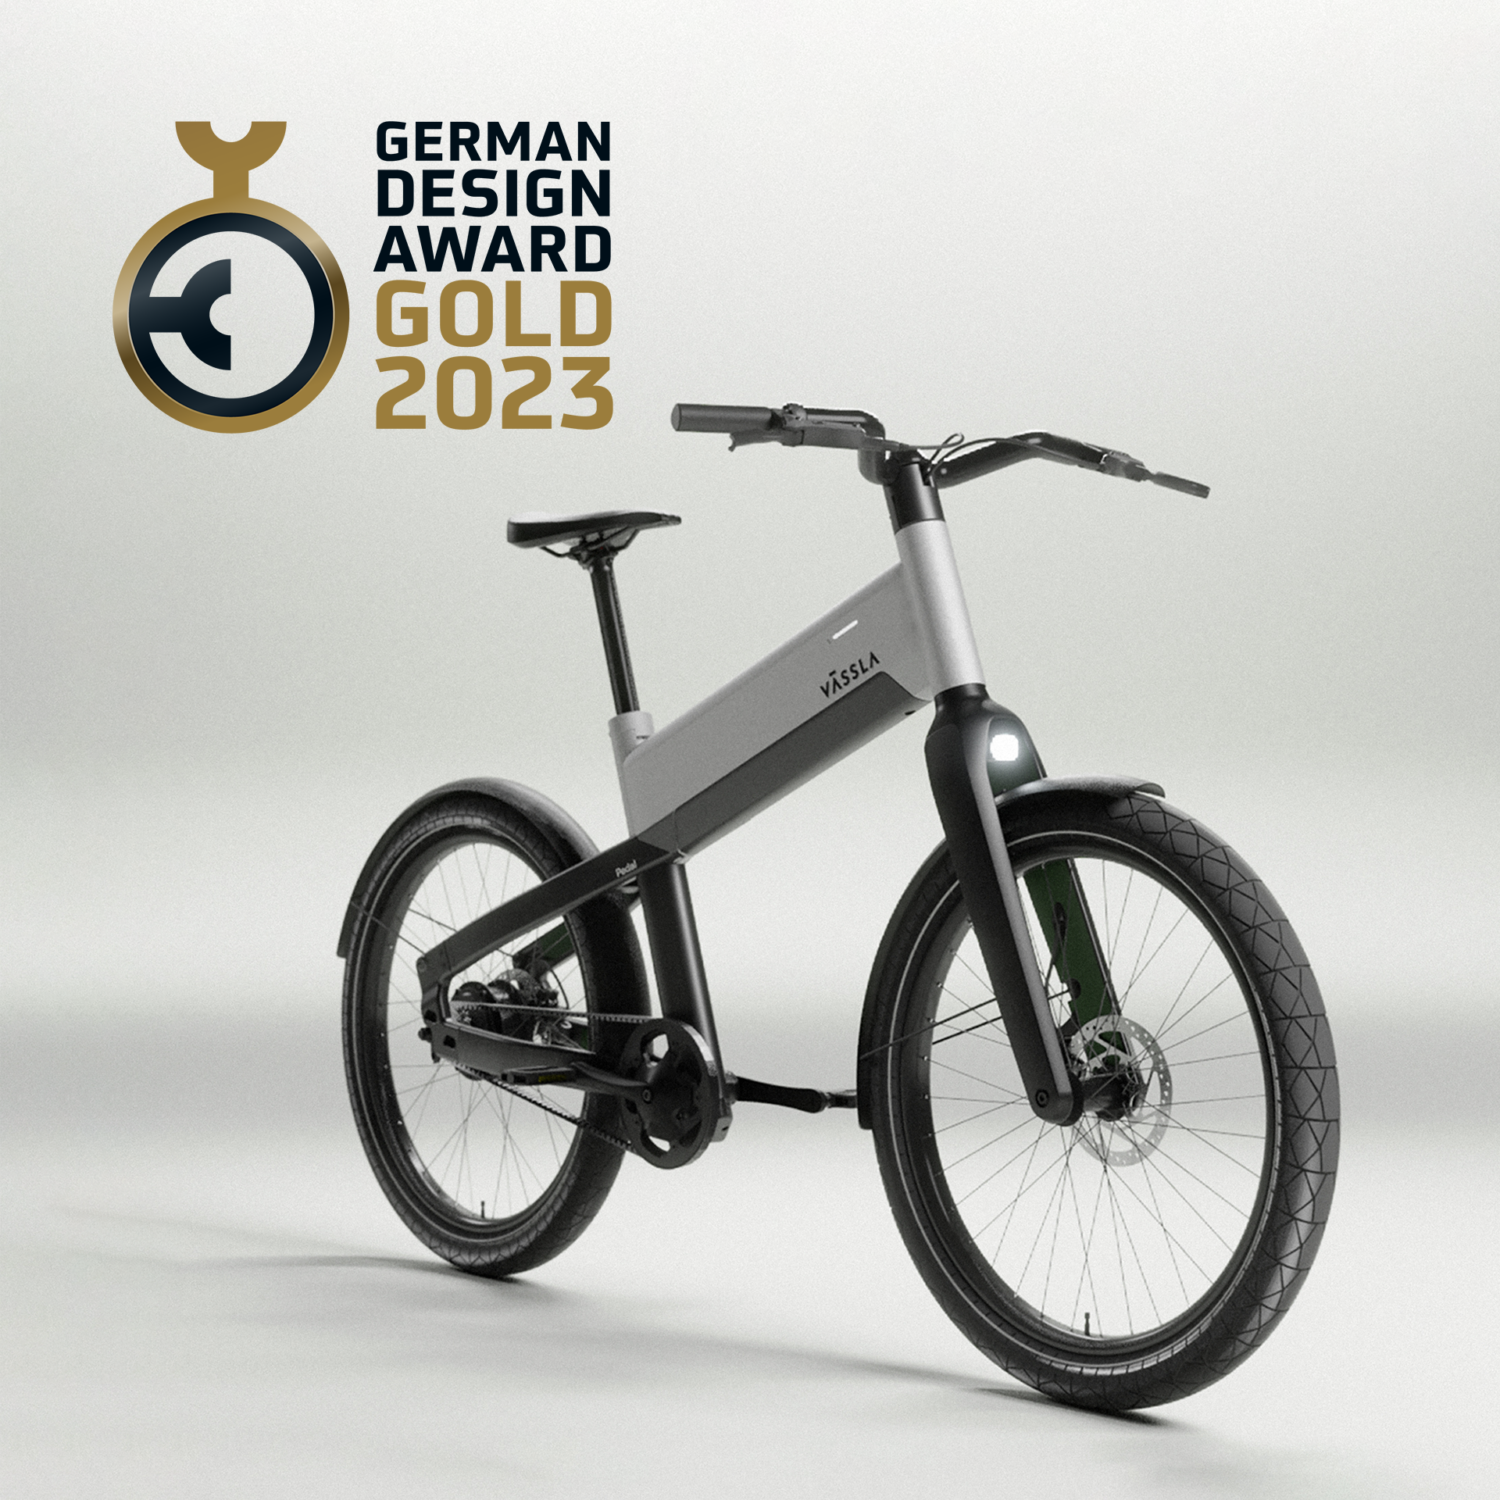 VÄSSLA Pedal German Design Award 2023 Gold